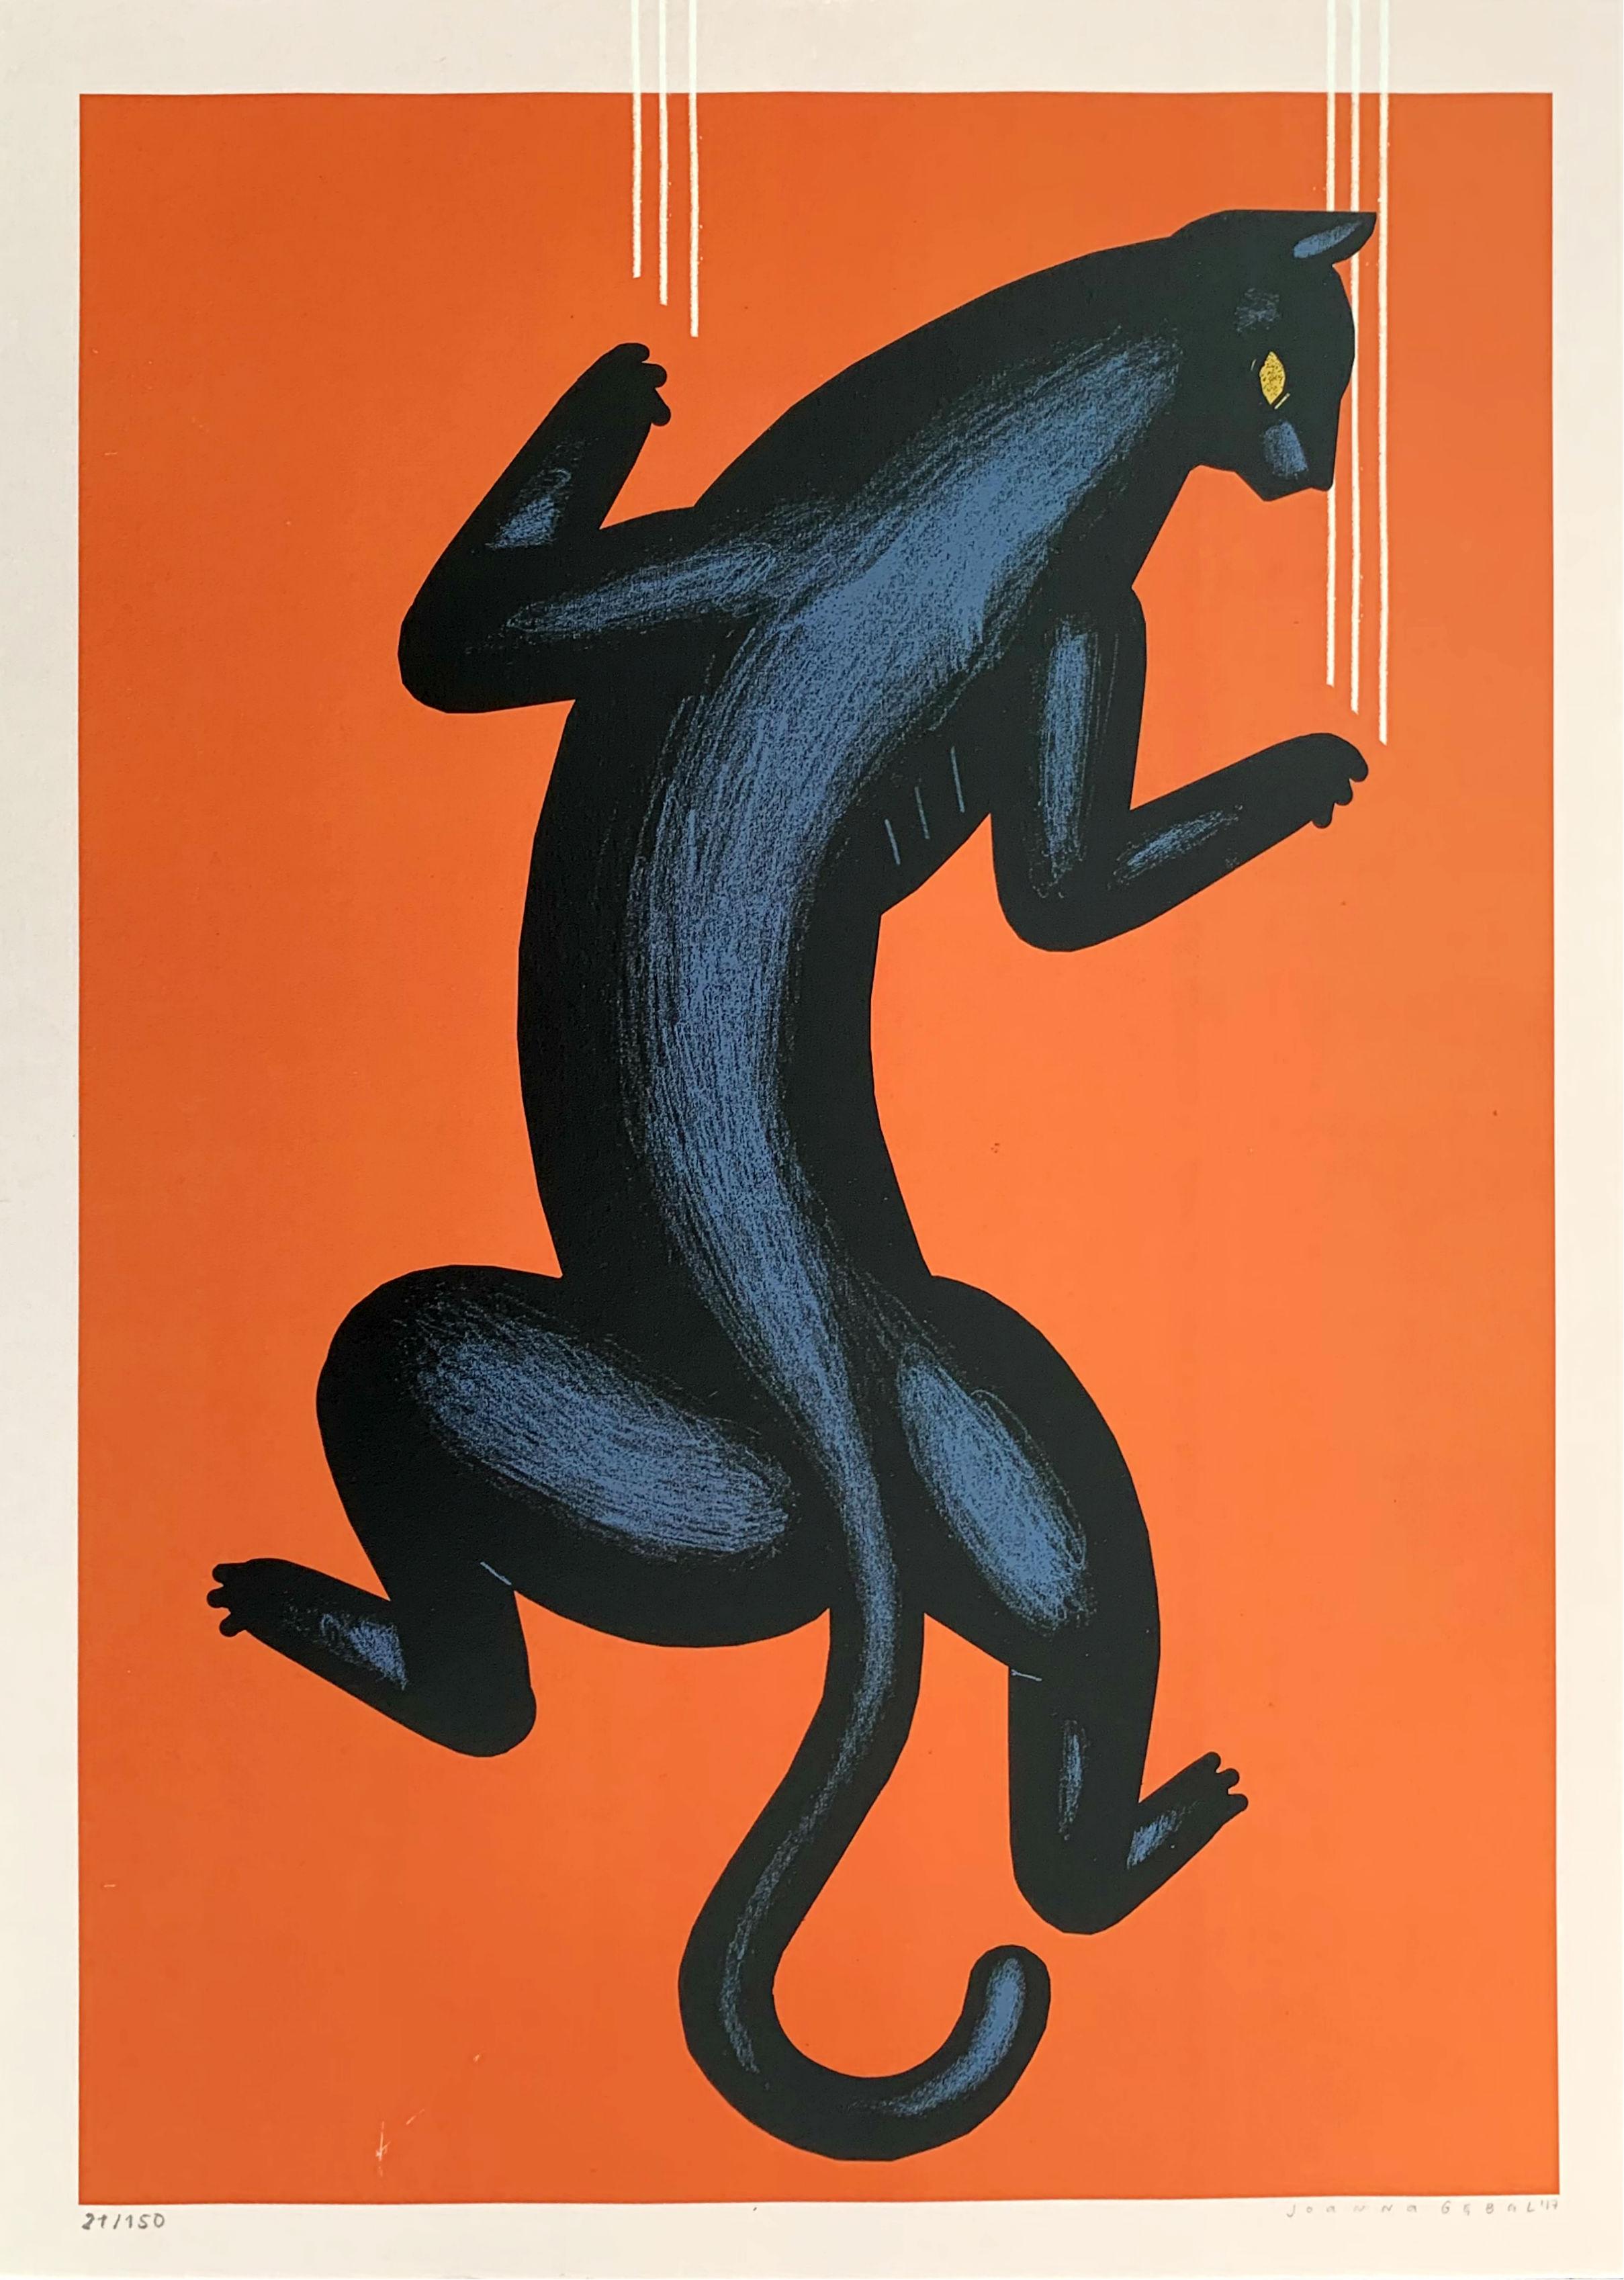 Panther - Digital print, Animal, Black & Orange, Young art, Vibrant colors - Print by Joanna Gebal